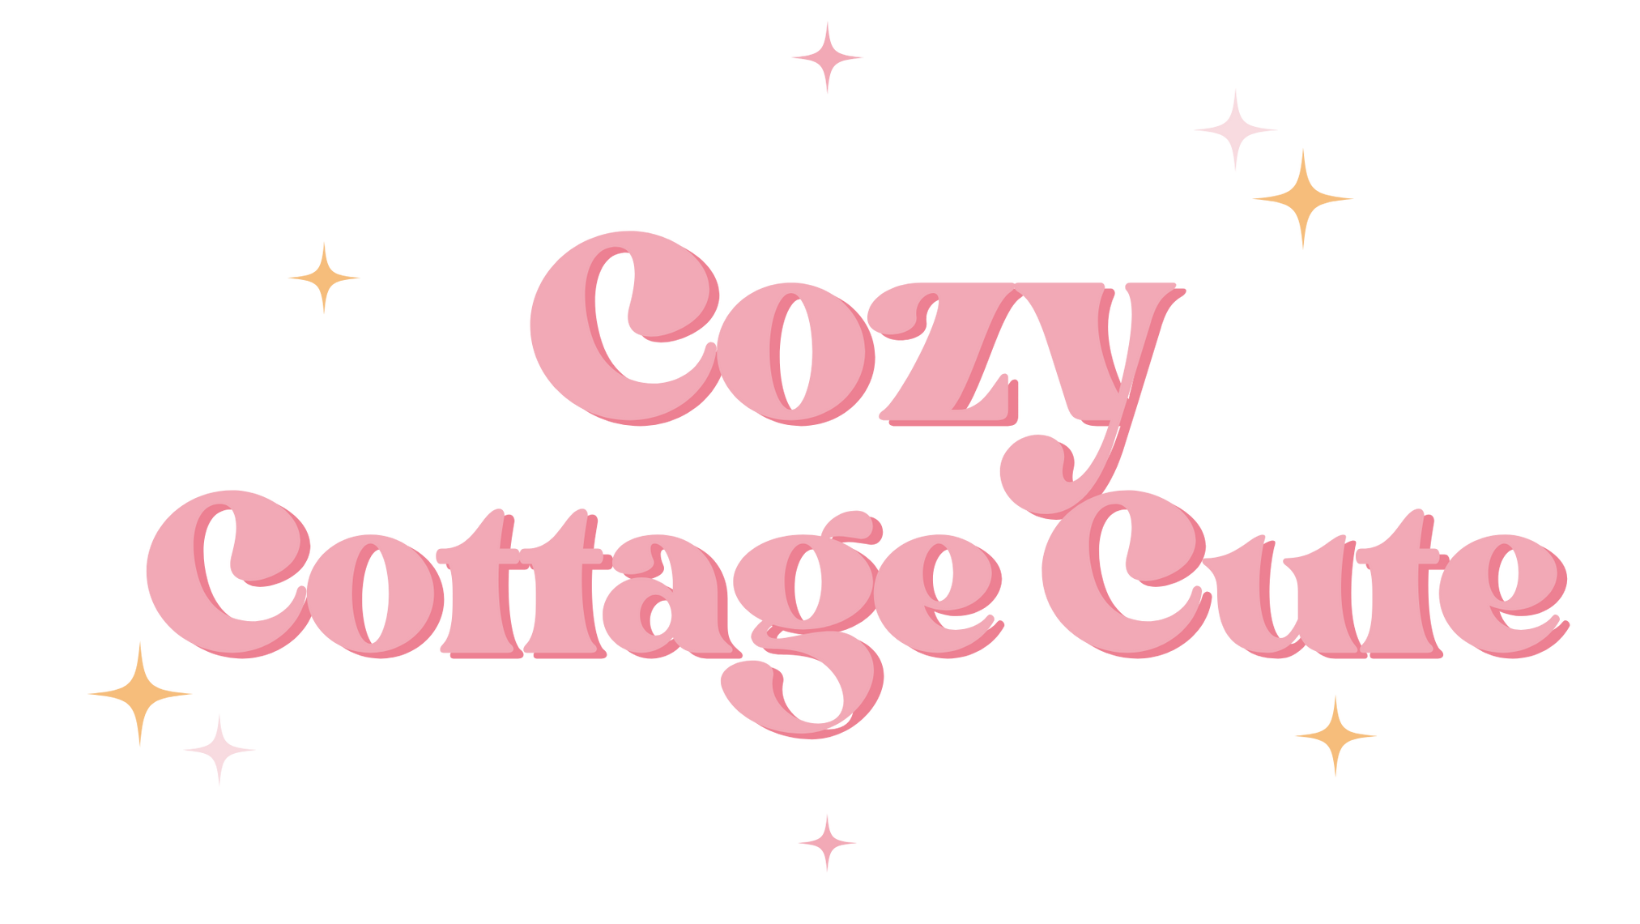 CozyCottageCute